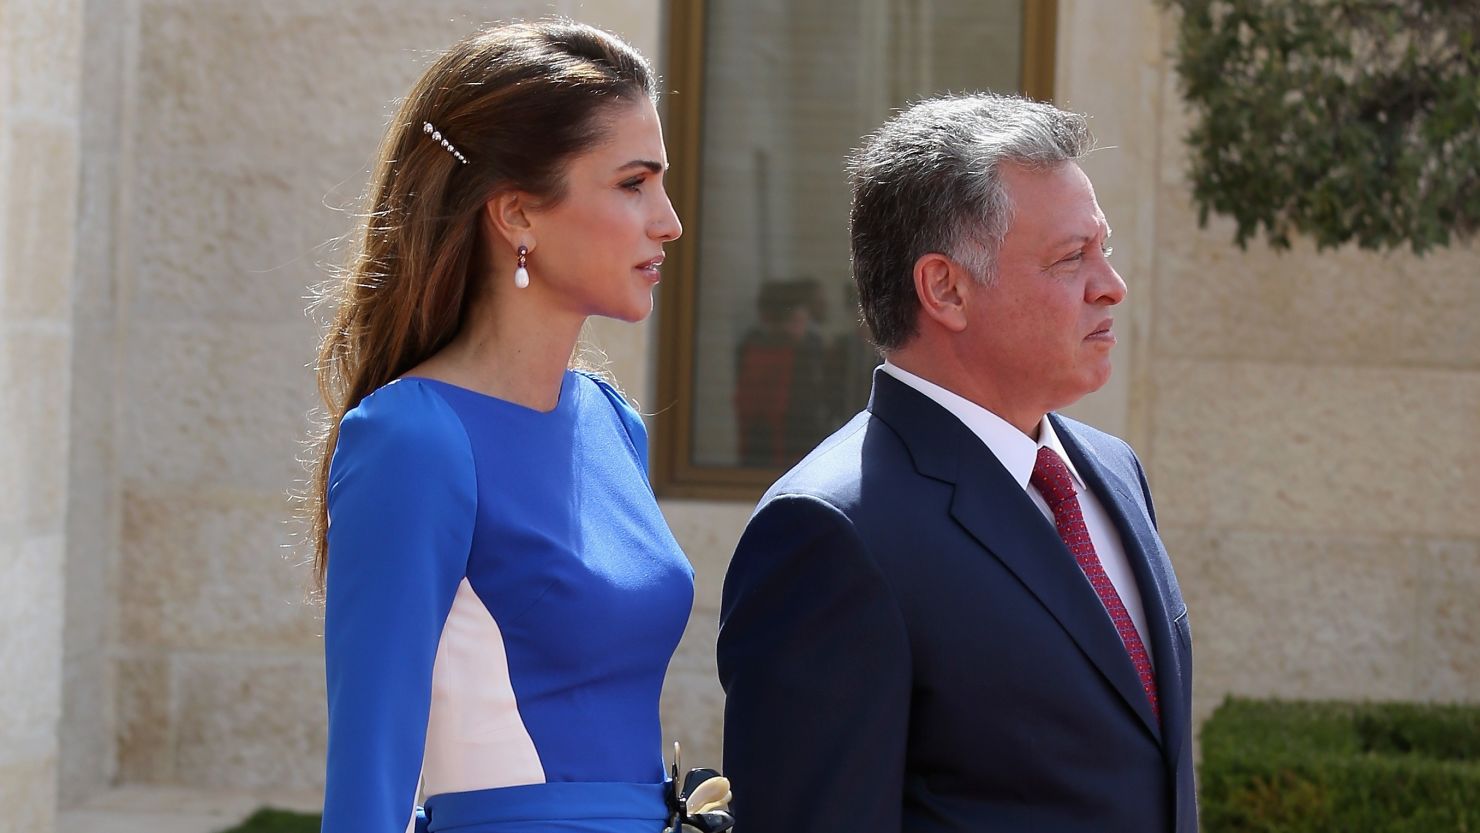 King Abdullah of Jordan and Queen Rania arrive at the Royal Palace on March 12, 2013 in Amman, Jordan.